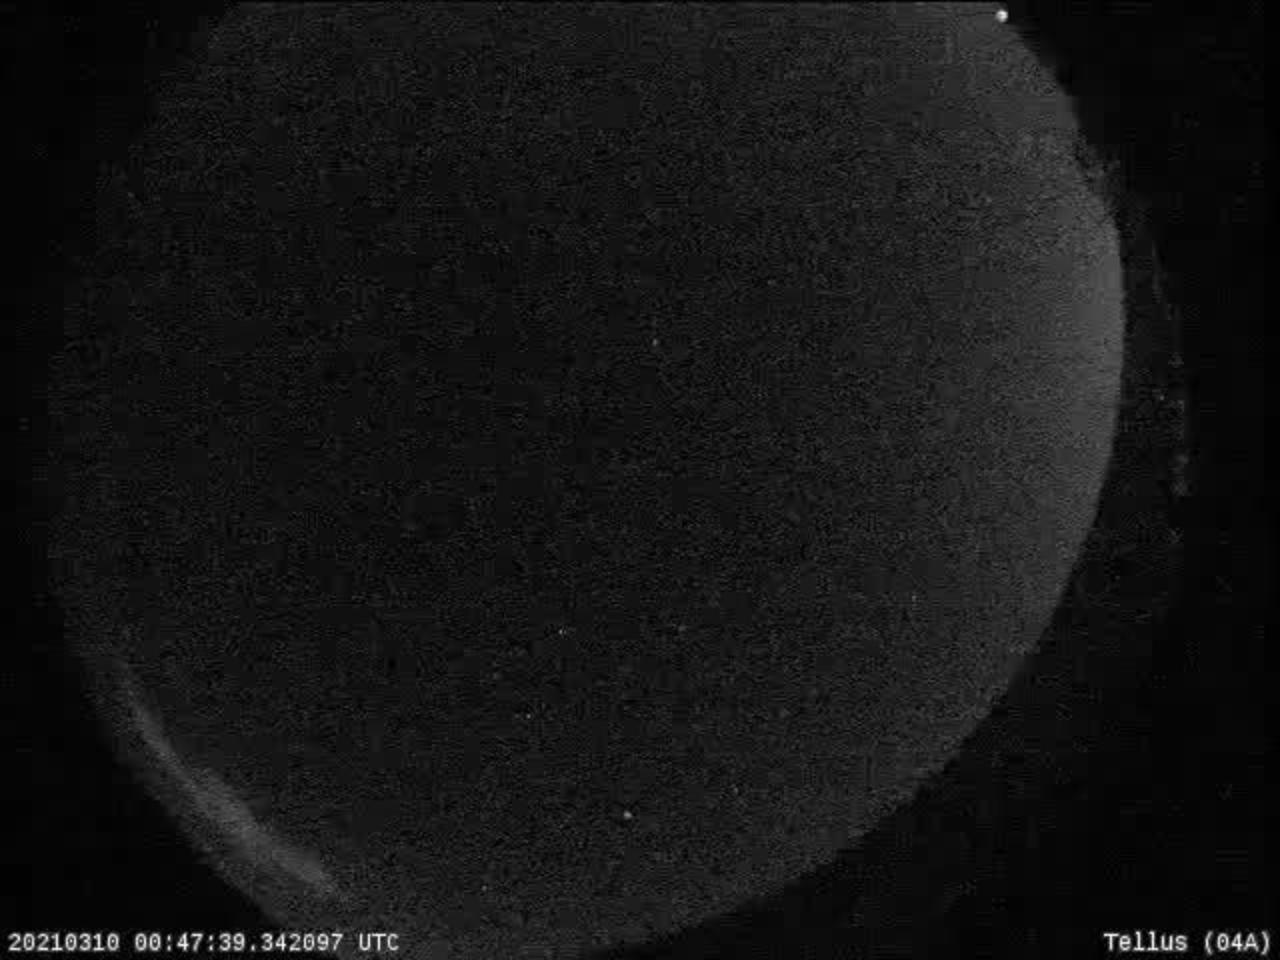 NASA video of meteorite over Georgia